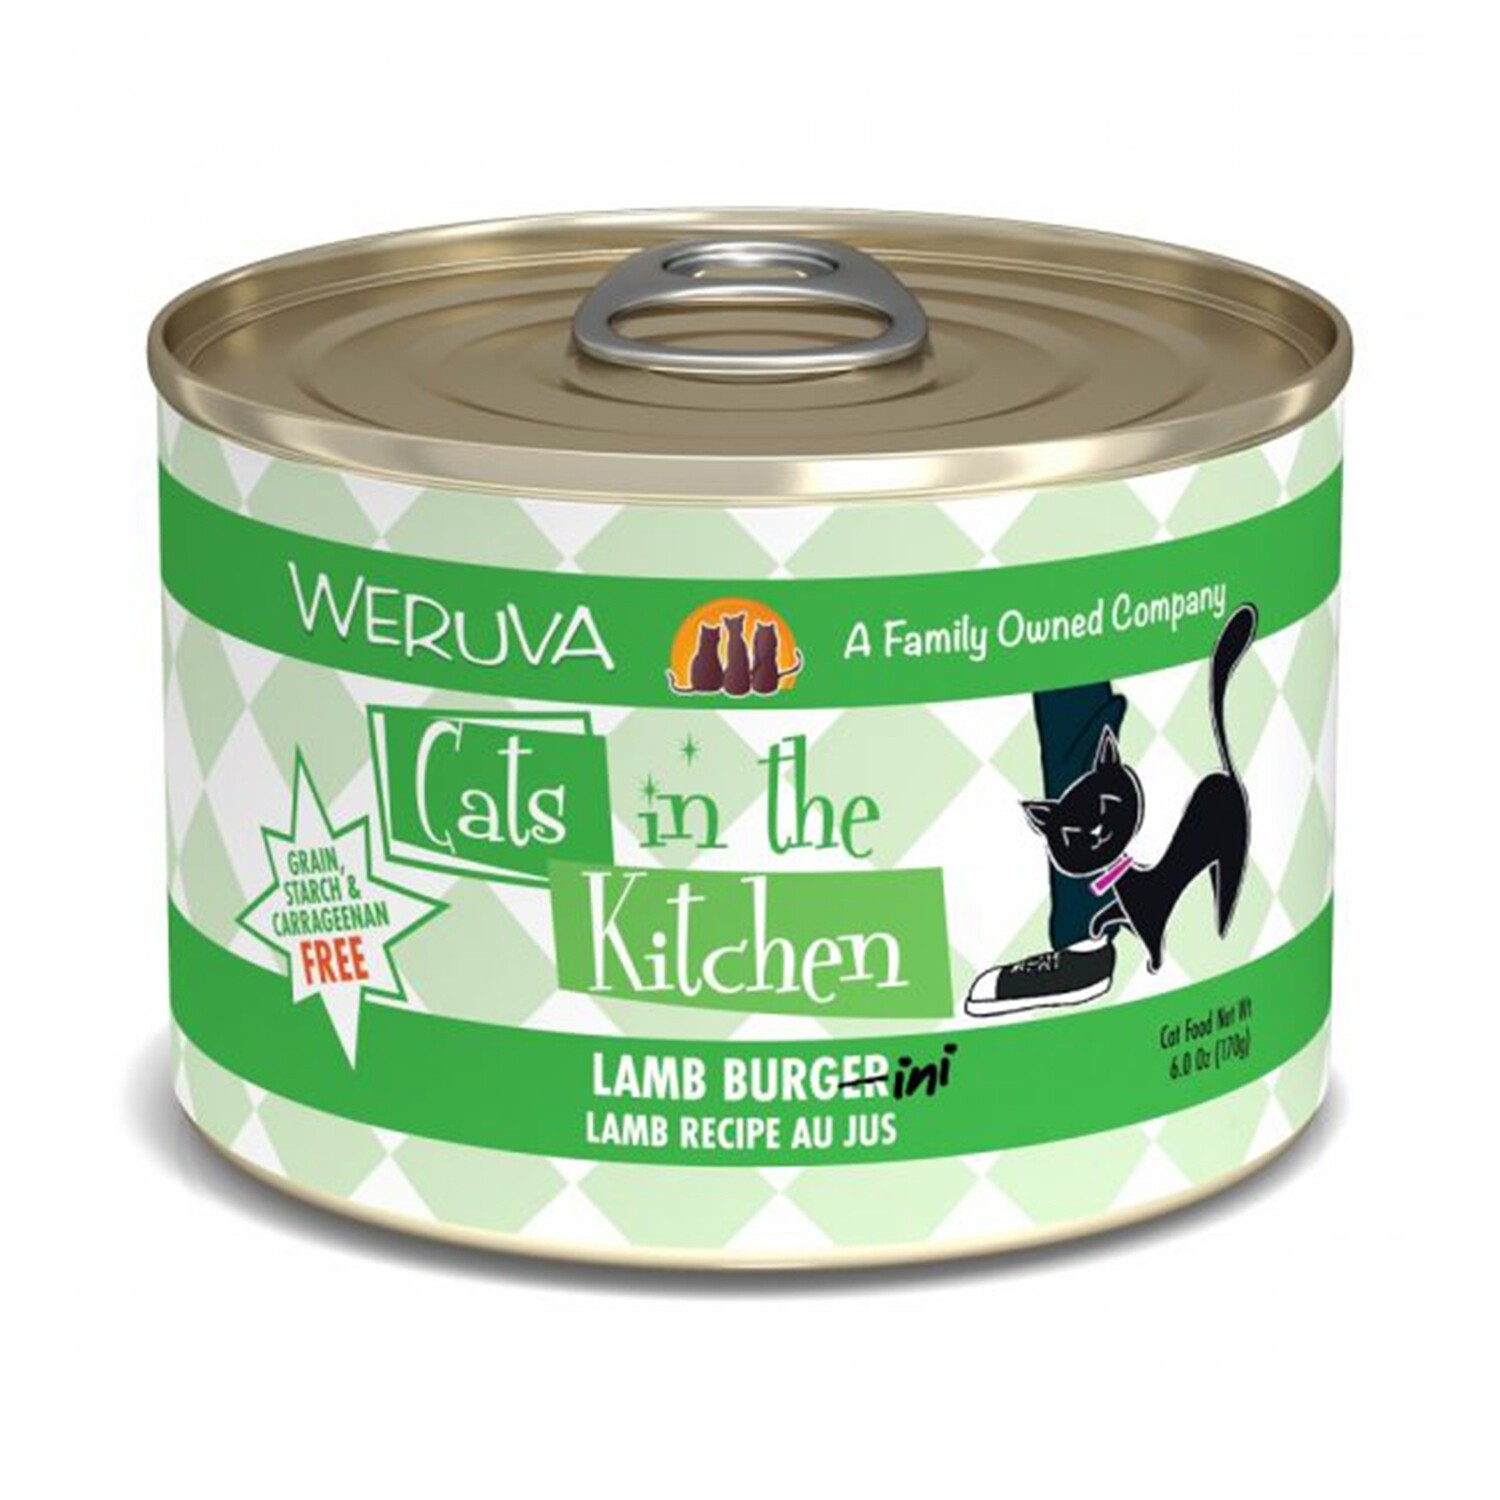 Weruva Cats in the Kitchen Lamb Burgerini Canned Cat Food-3.2oz - 羊肉猫罐头